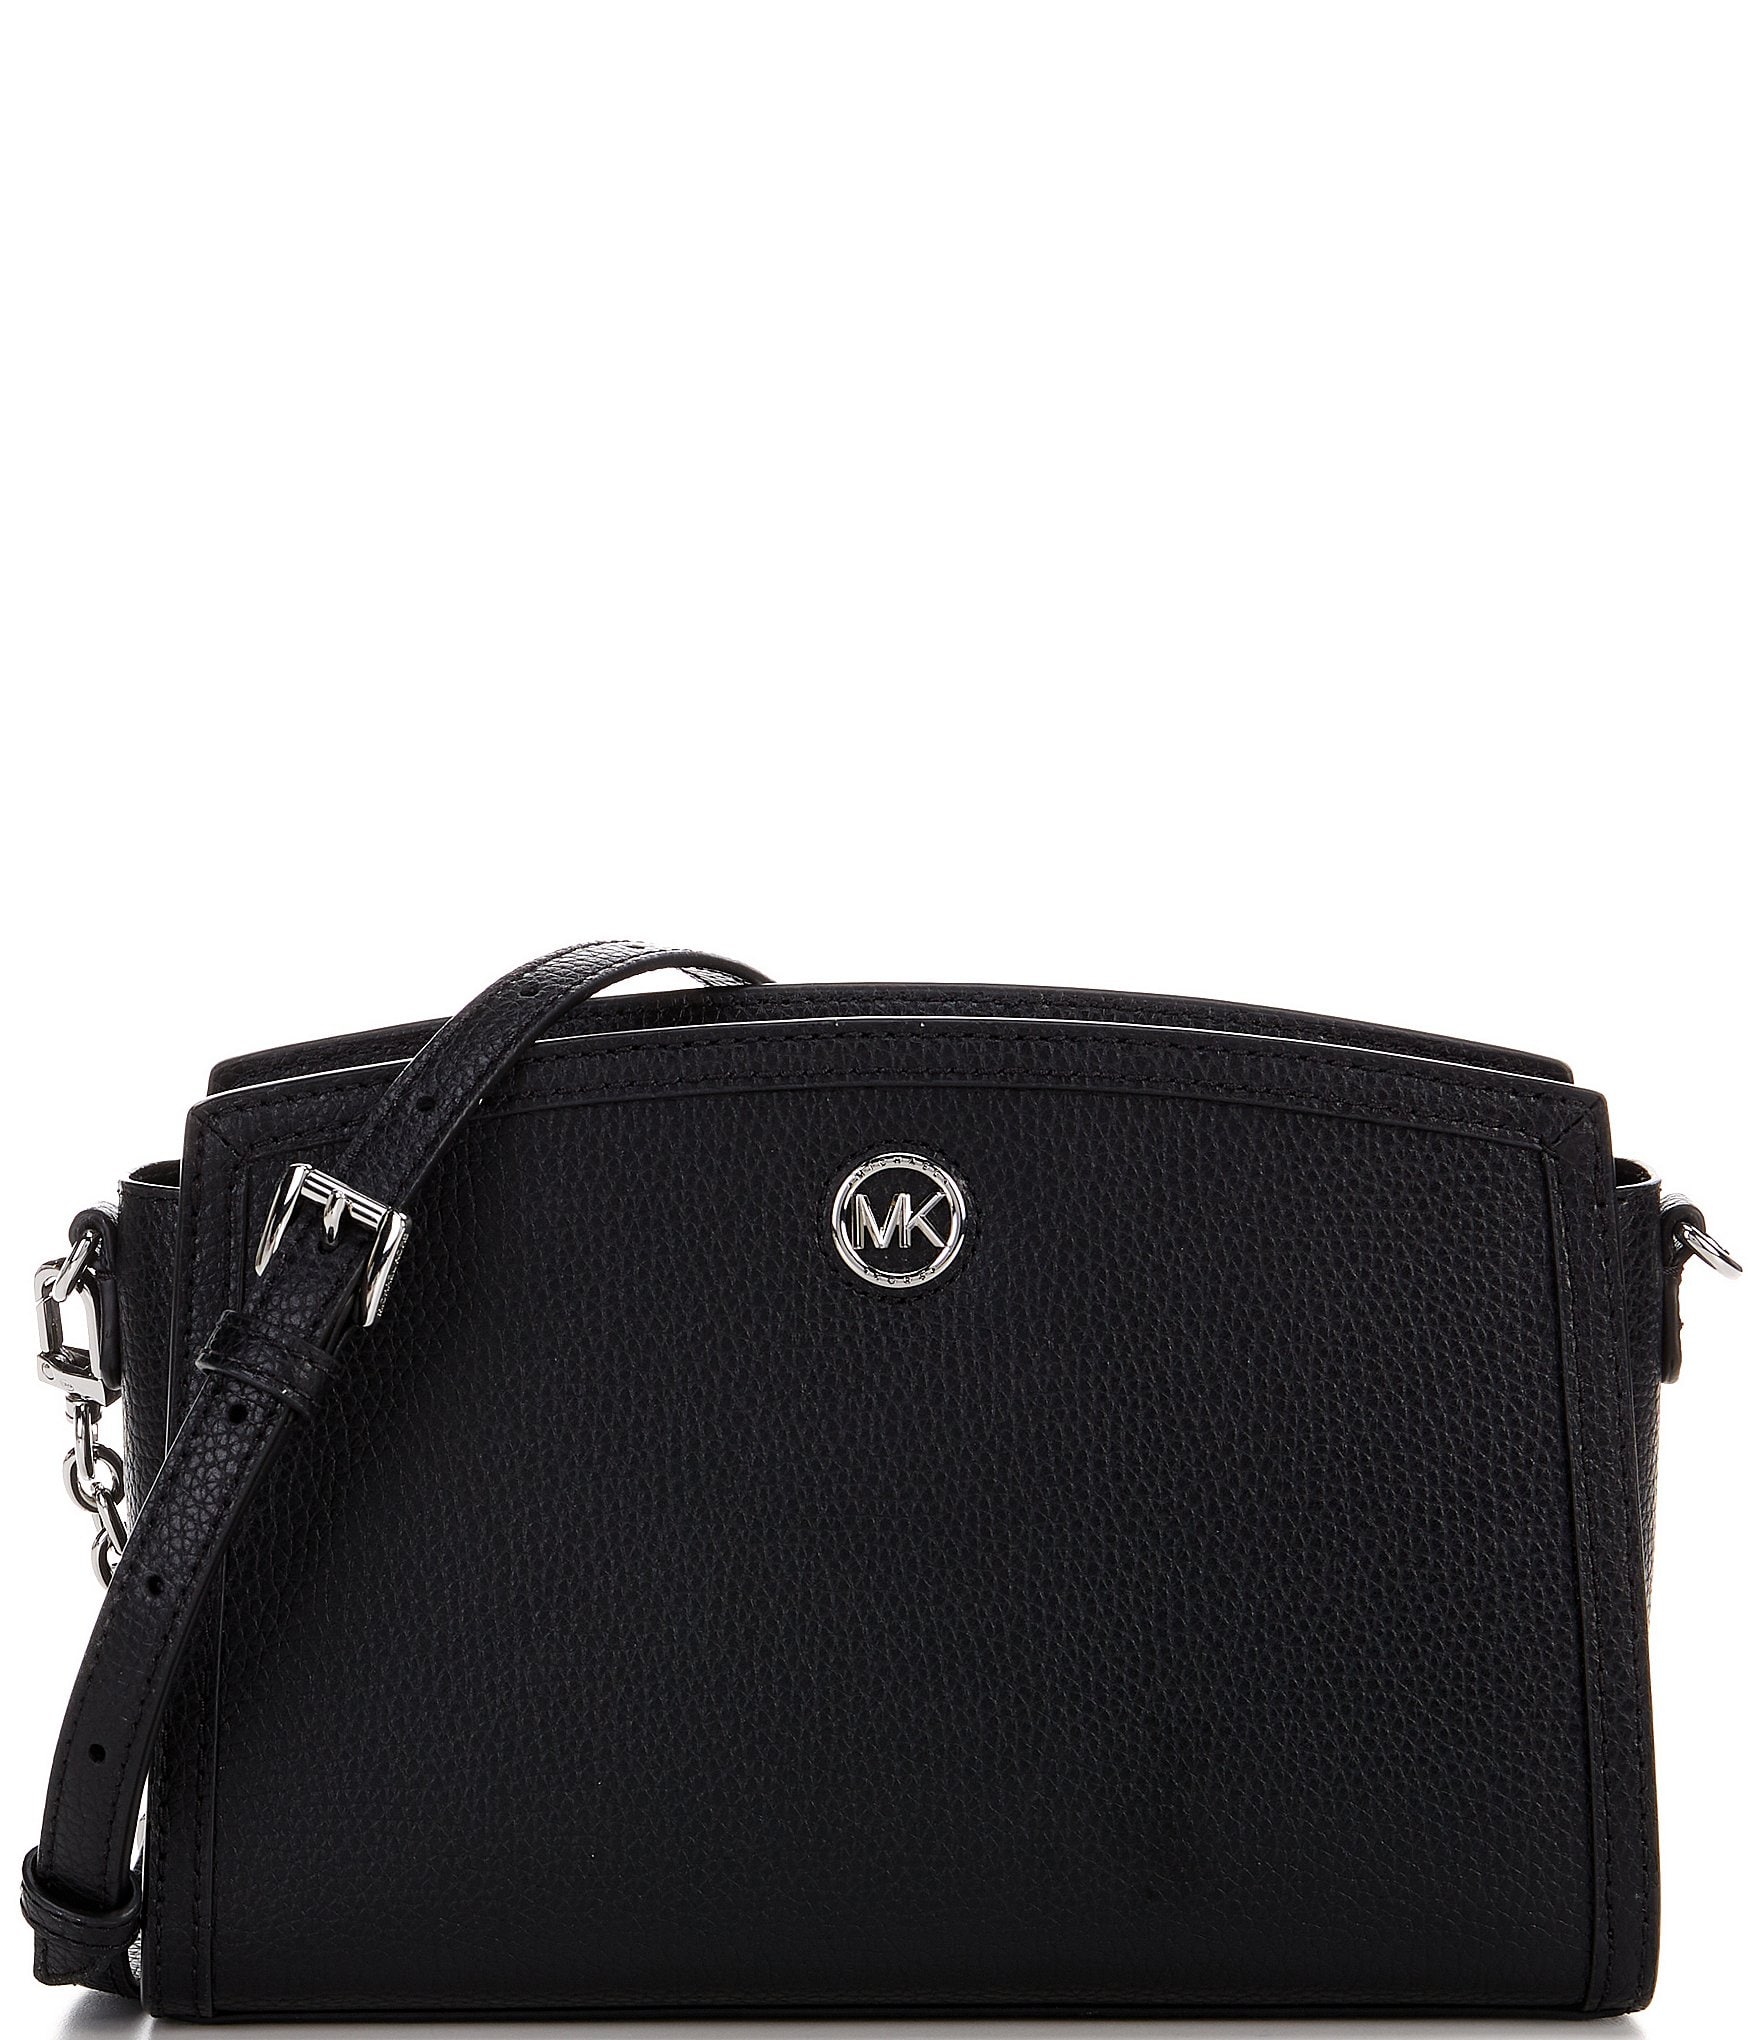 Michael Kors Chantal Extra Small Crossbody Cerise One Size: Handbags:  .com